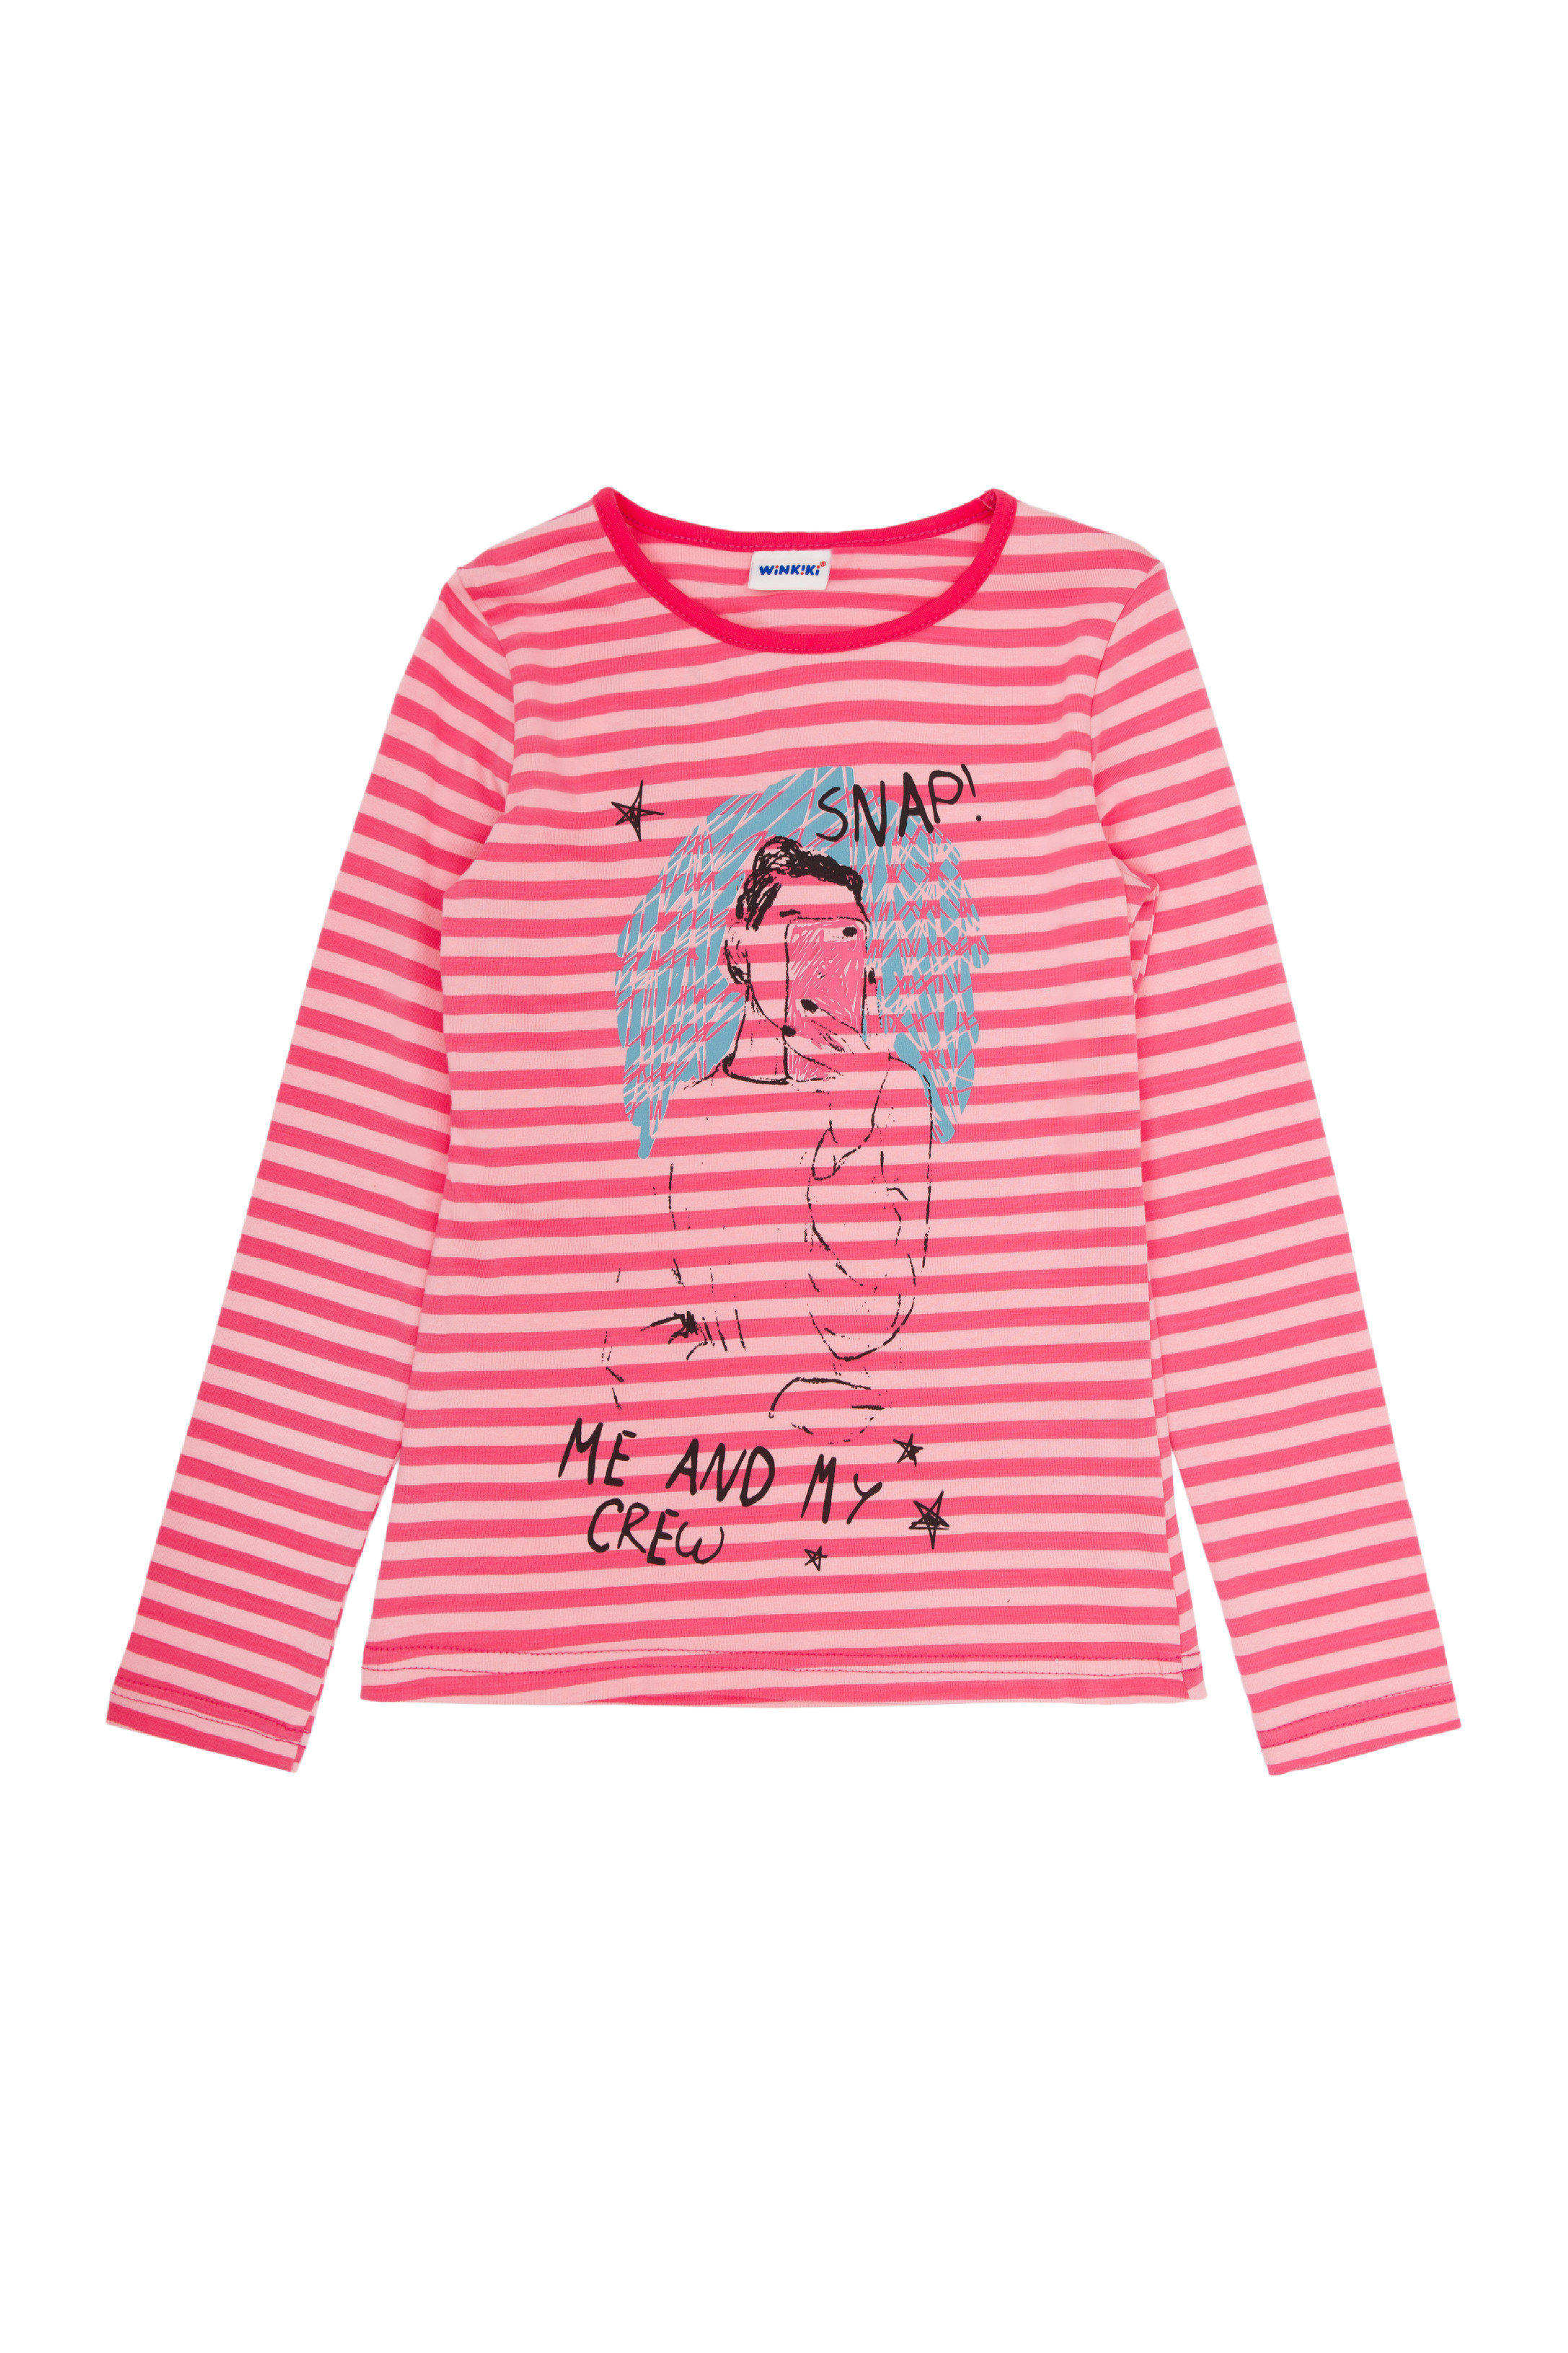 Dívčí triko - Winkiki WJG 01736, růžová Barva: Růžová, Velikost: 152